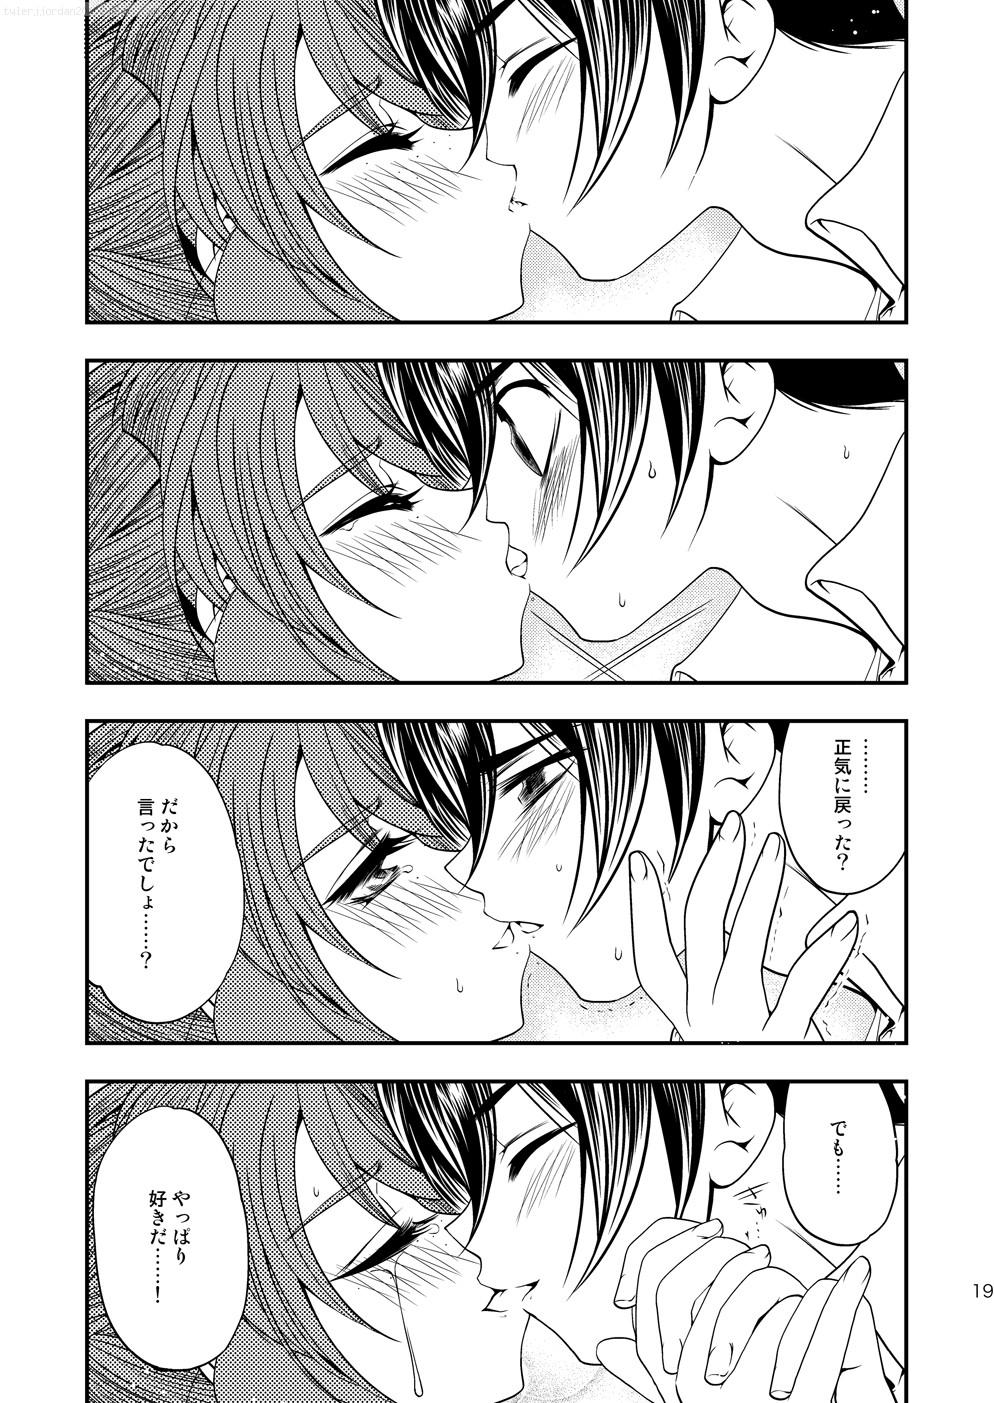 Maru Maru Mori Mori: Gemini Begs For A Kiss Because of the Sticky Medicine 17